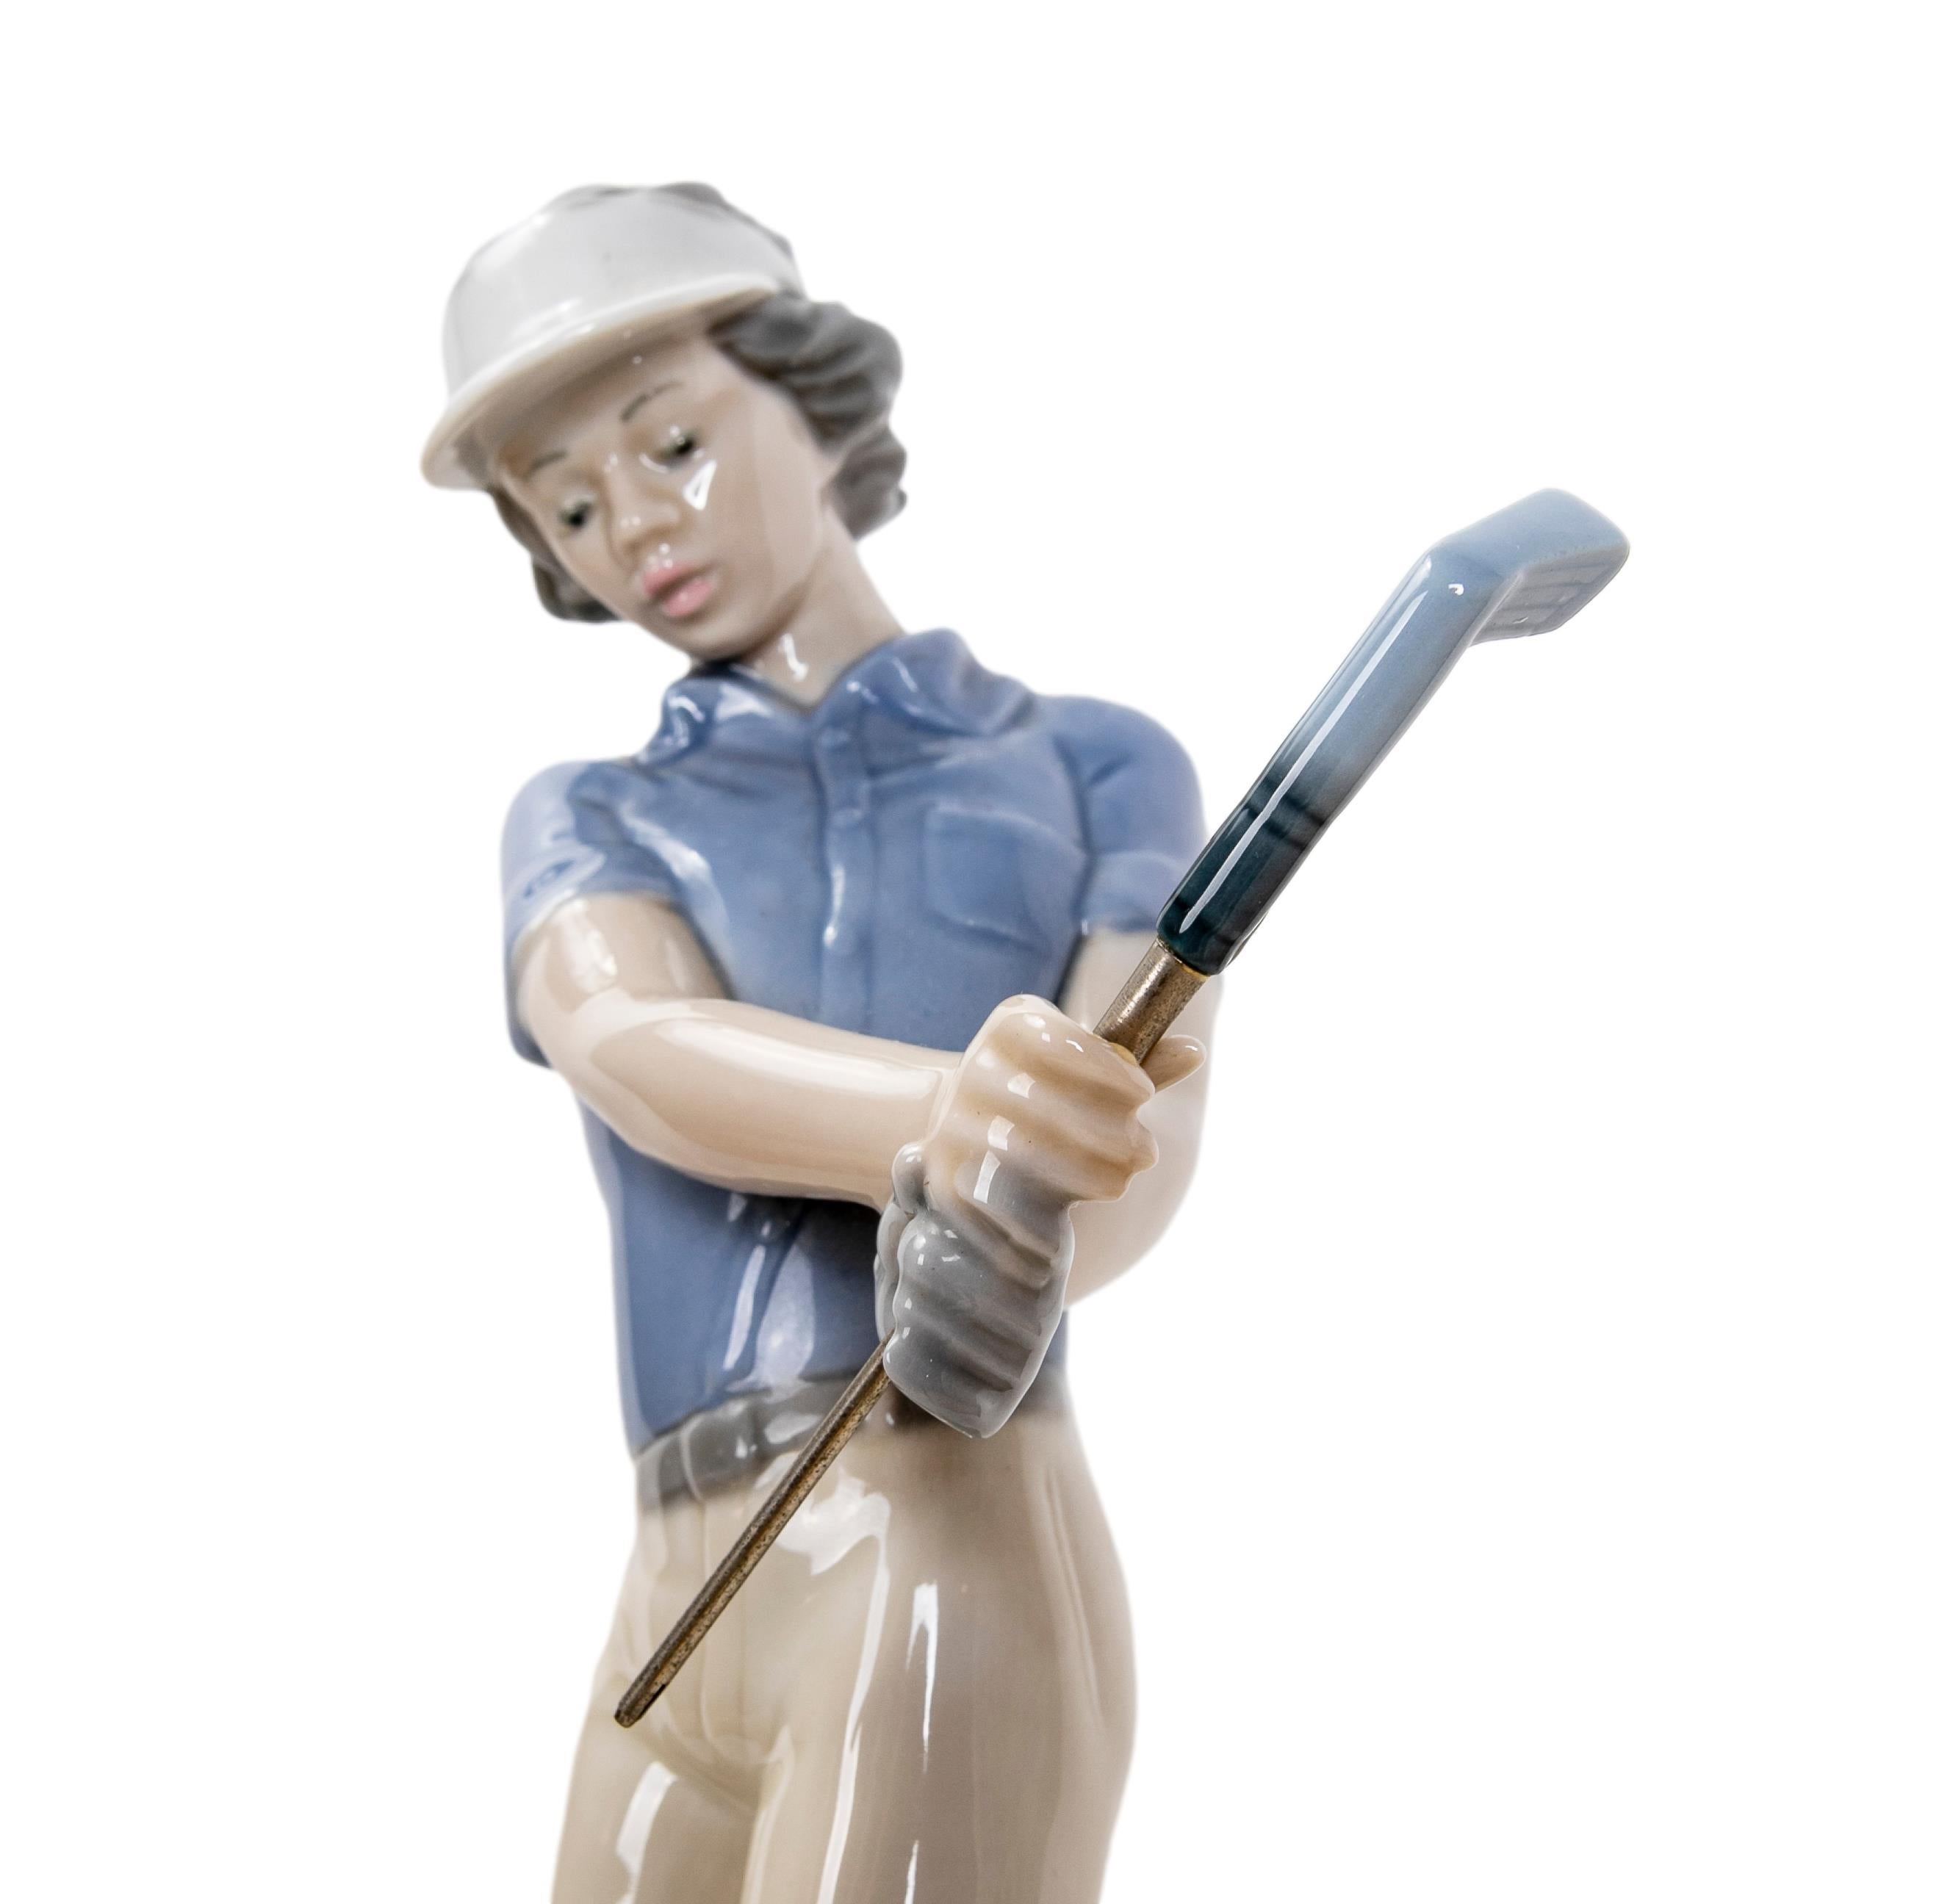 20th Century Figura de Porcelana de Jugador de Golf, Firmada 1985, Lladro For Sale